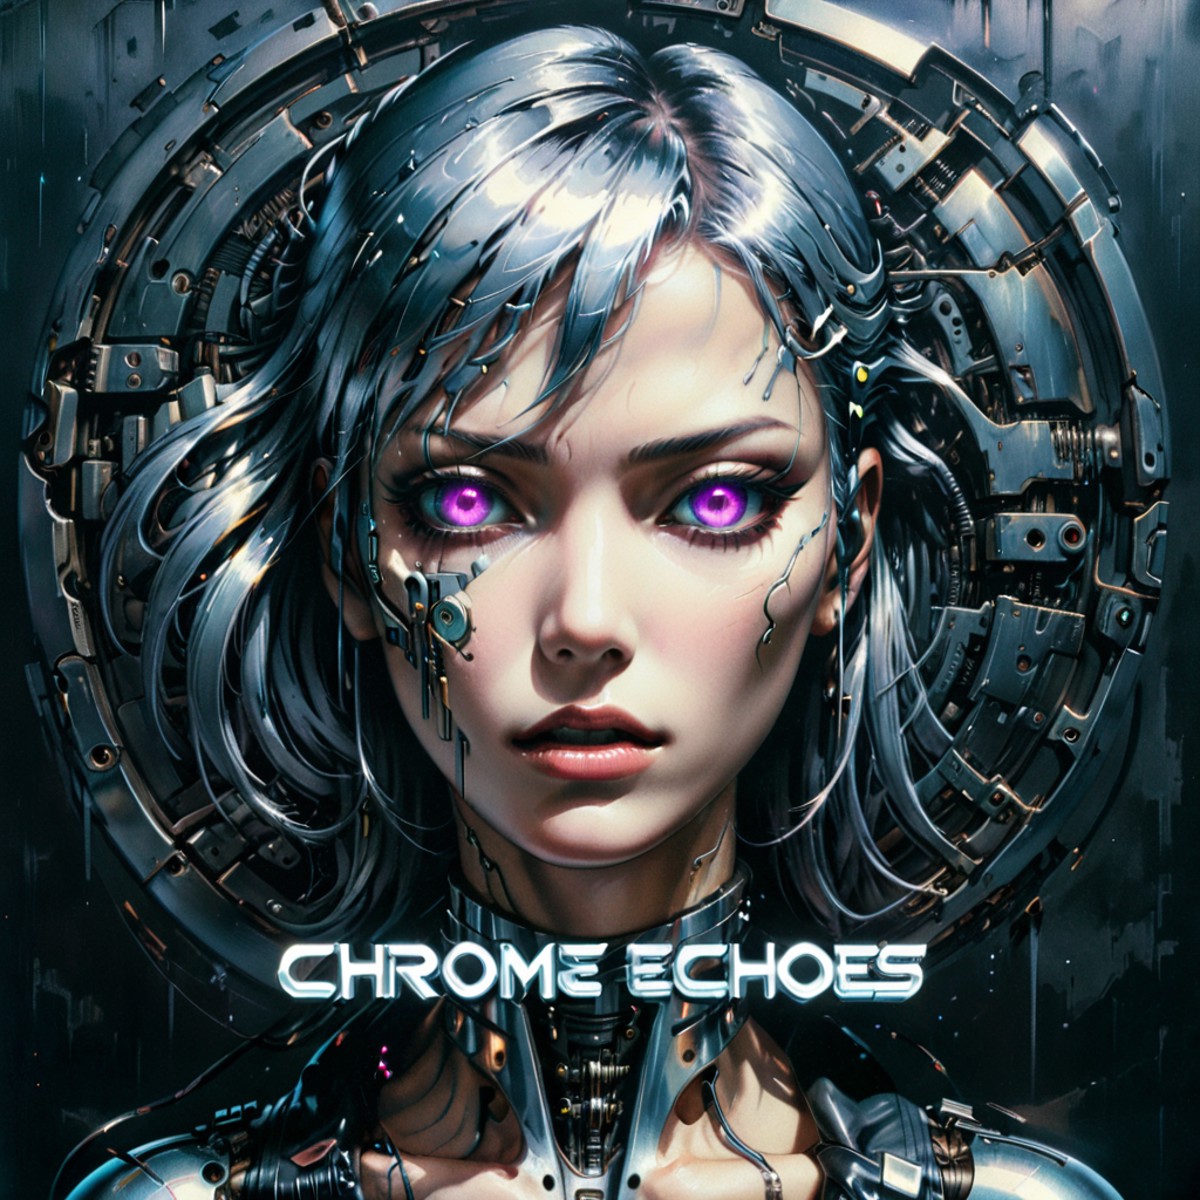 <lora:Harrlogos_v2.0:1> CHROME ECHOES text logo, album cover art by hajime sorayama, cyberpunk, lighting creates a bleak a...